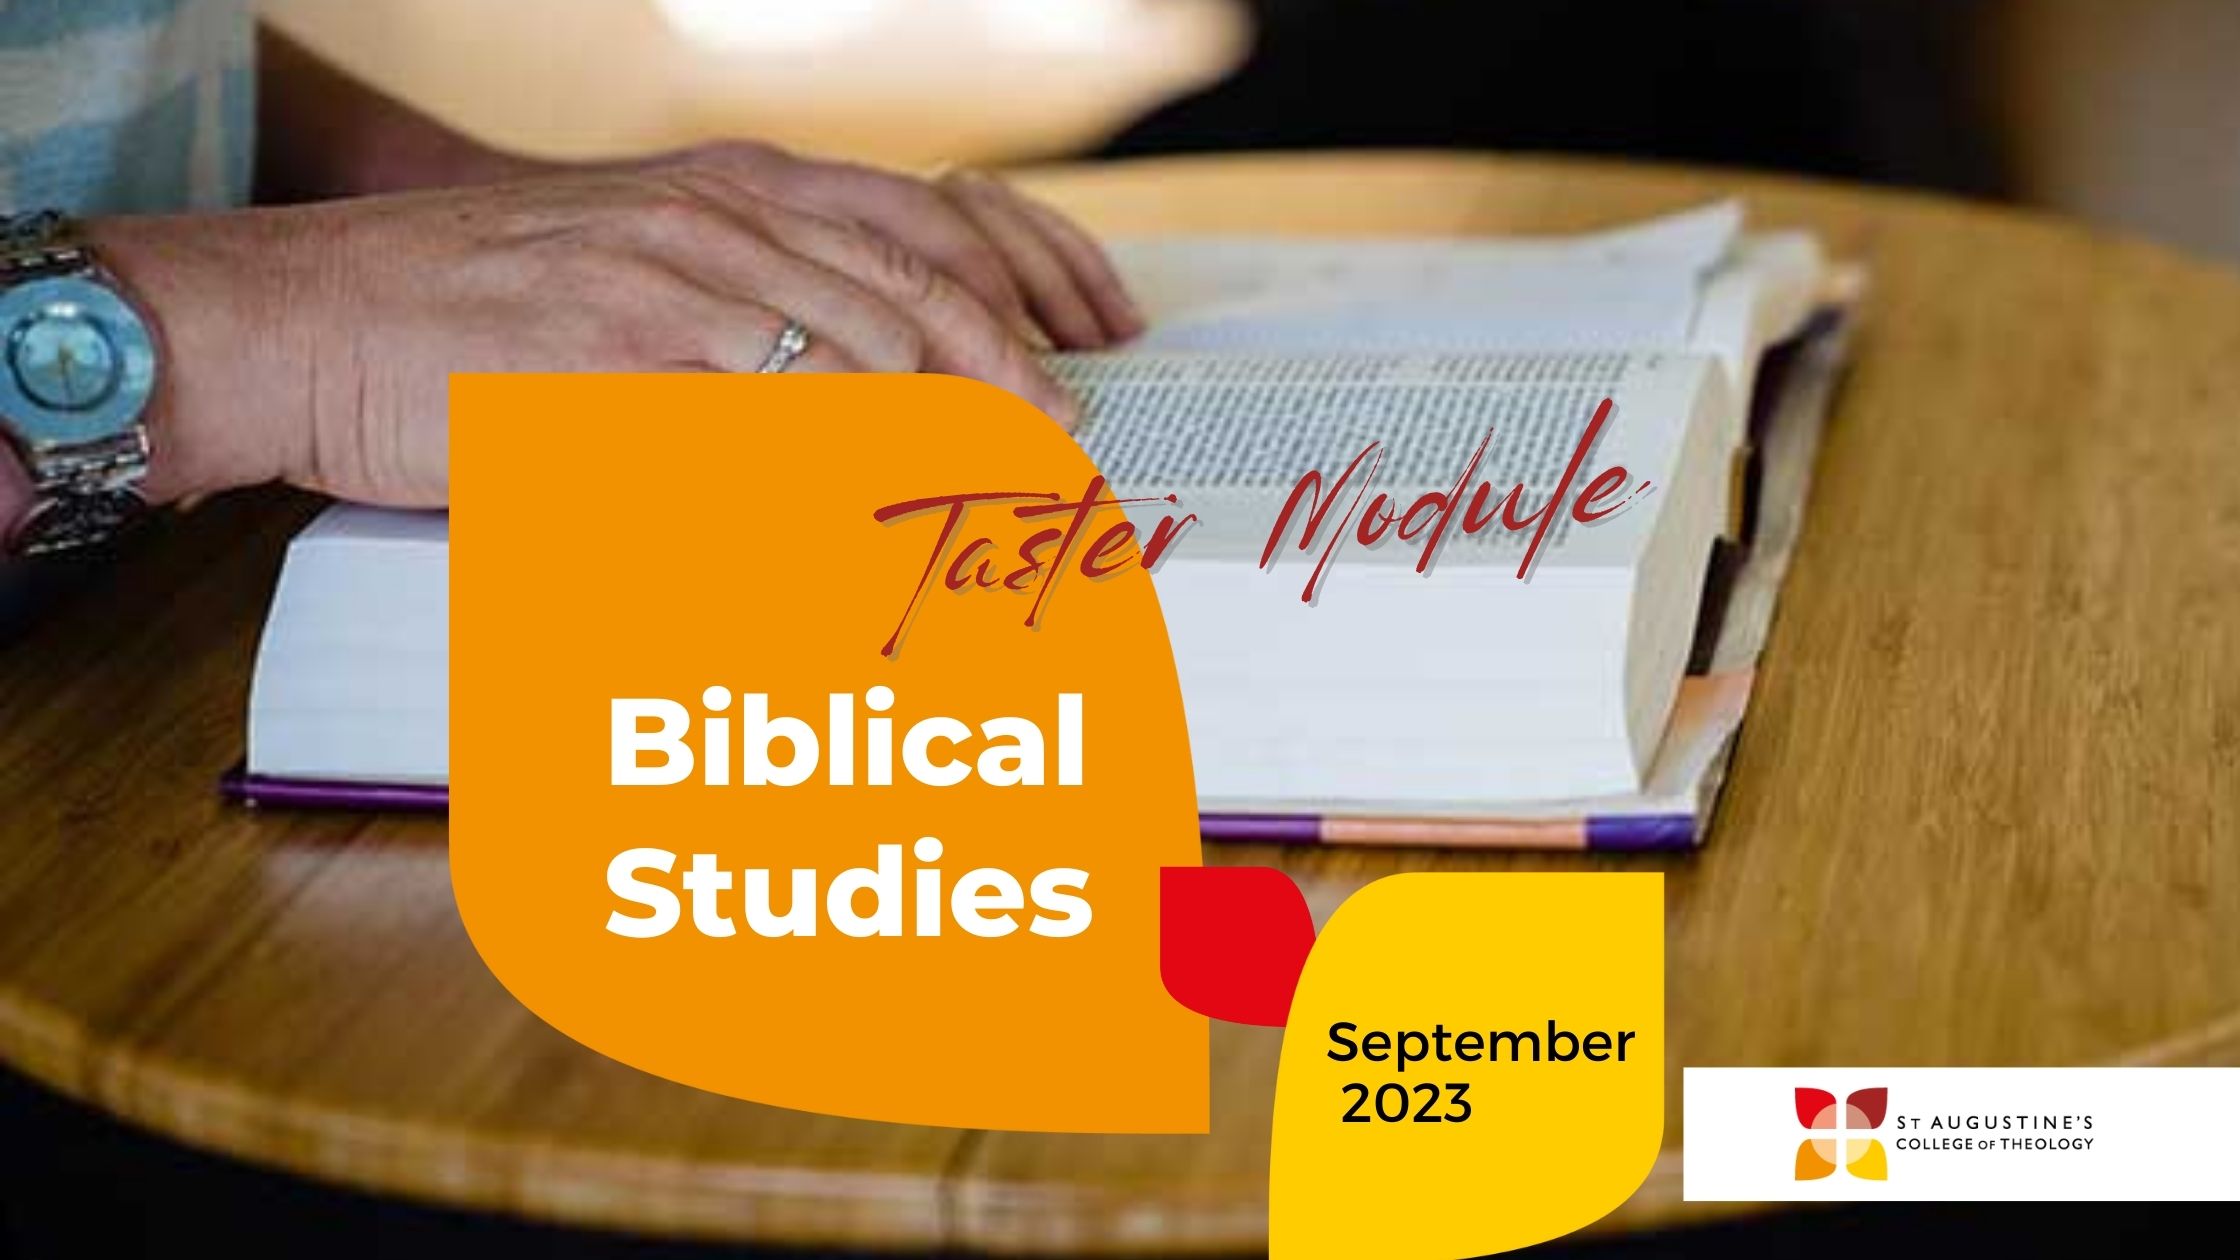 Biblical Studies taster module at St Augestine's